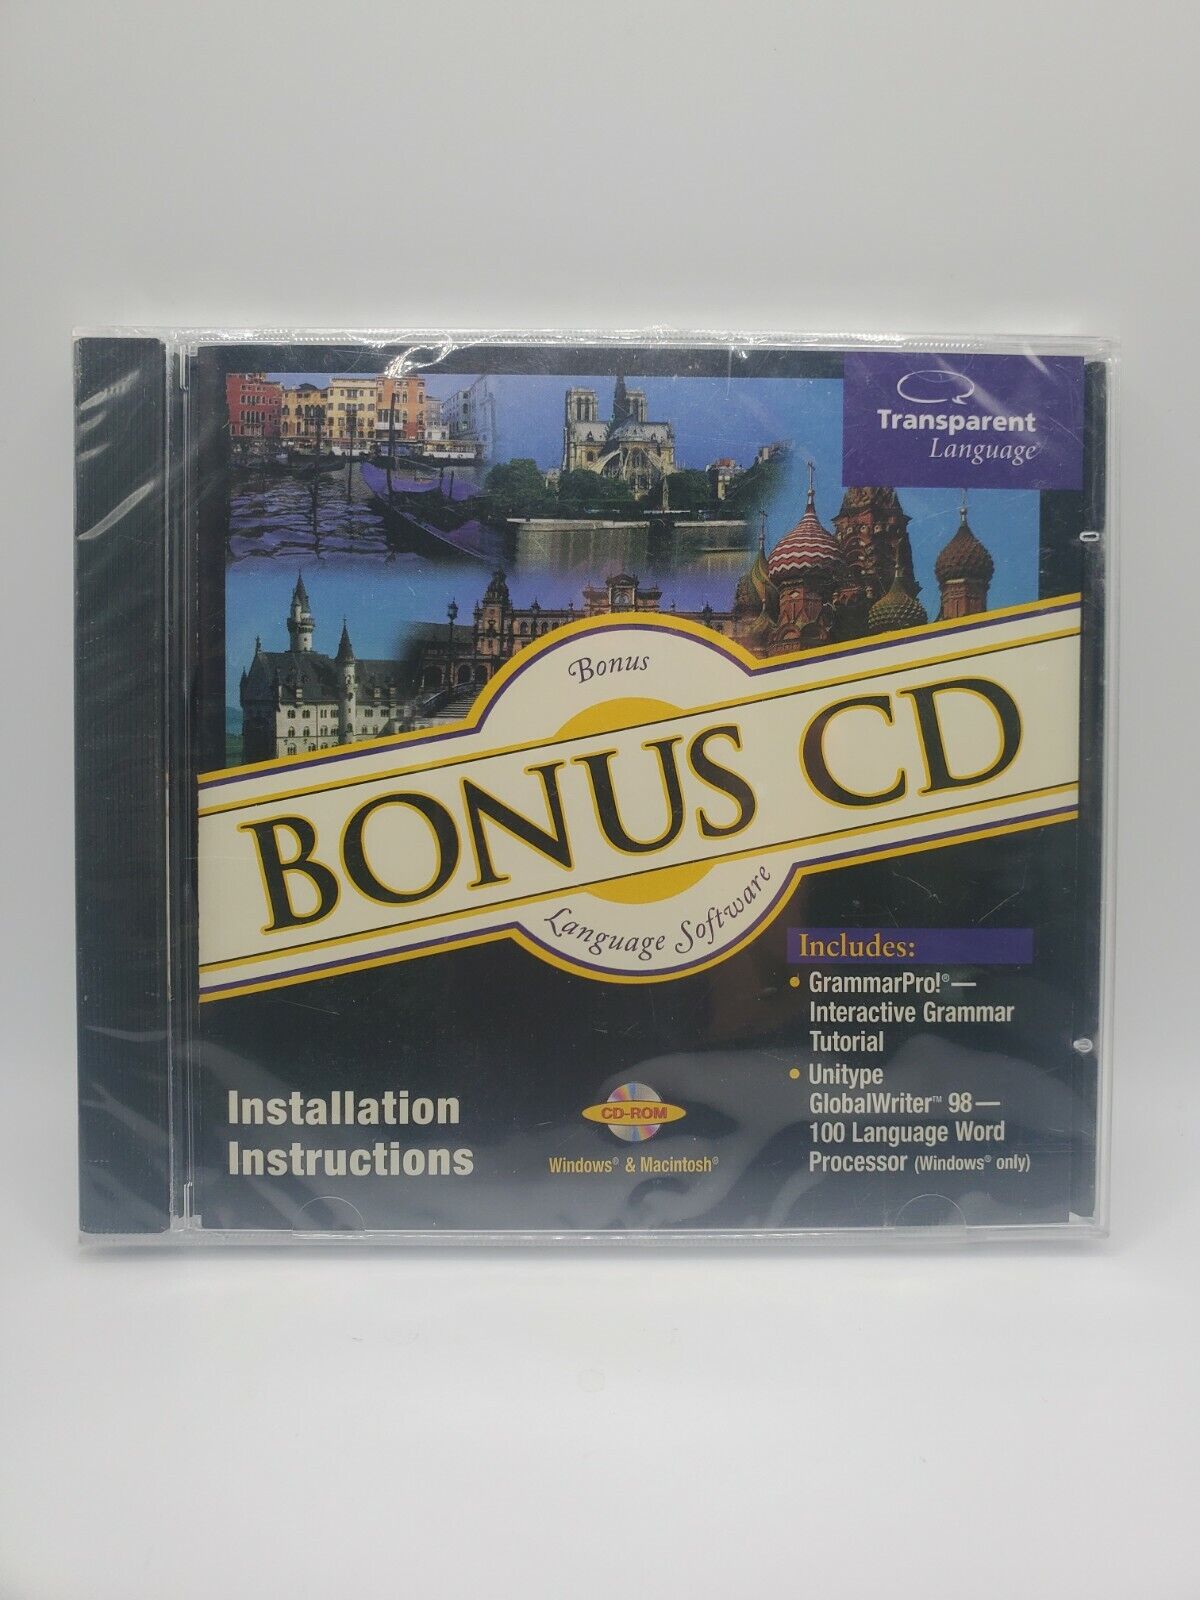 Transparent Language Bonus CD - GrammarPro - Software for PC Windows NEW